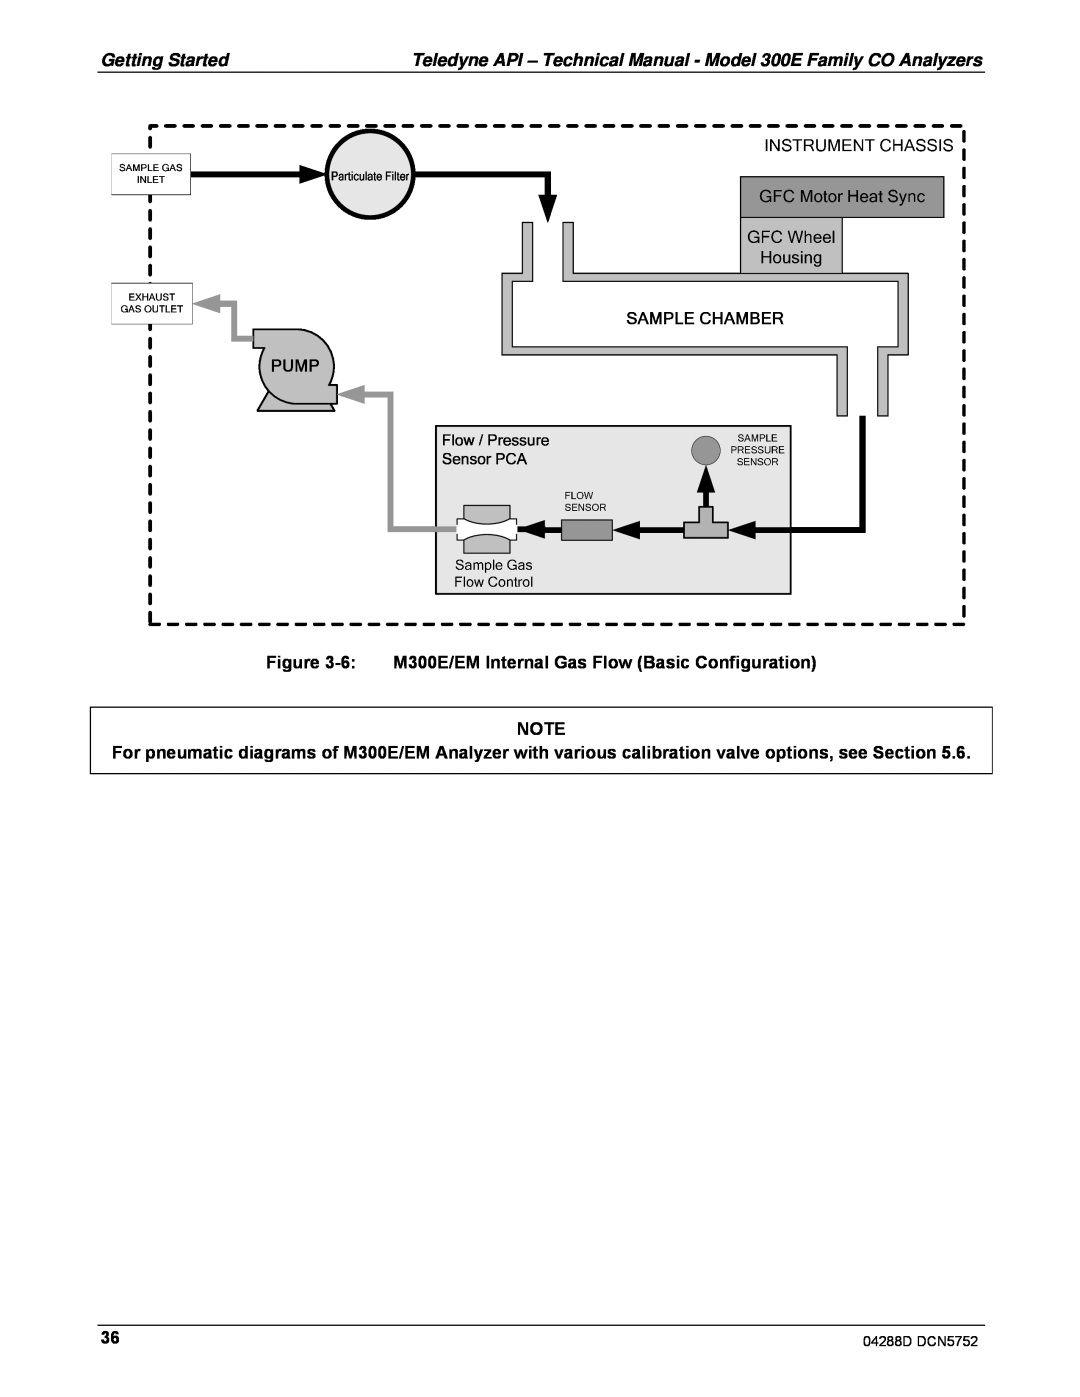 Teledyne M300EM operation manual 6:M300E/EM Internal Gas Flow Basic Configuration 